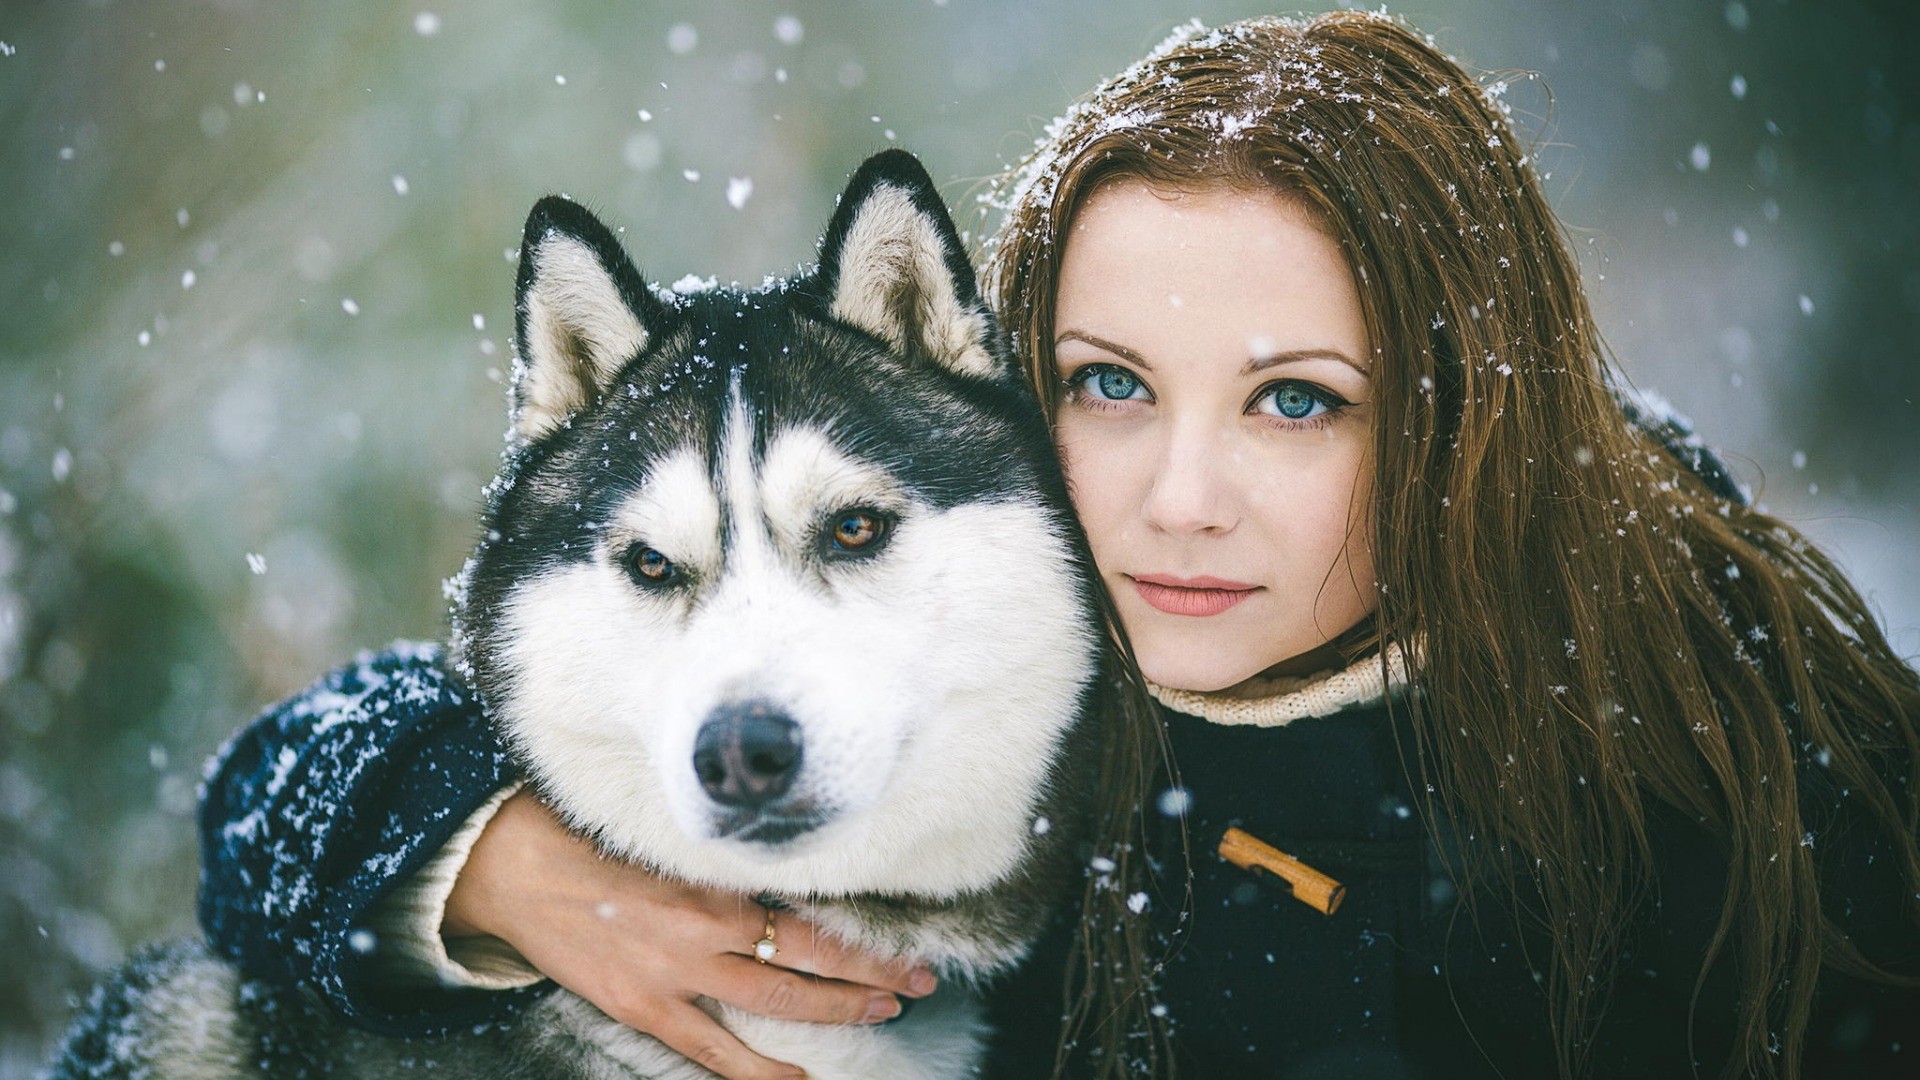 hugging green eyes dog women outdoors snow Wallpaper